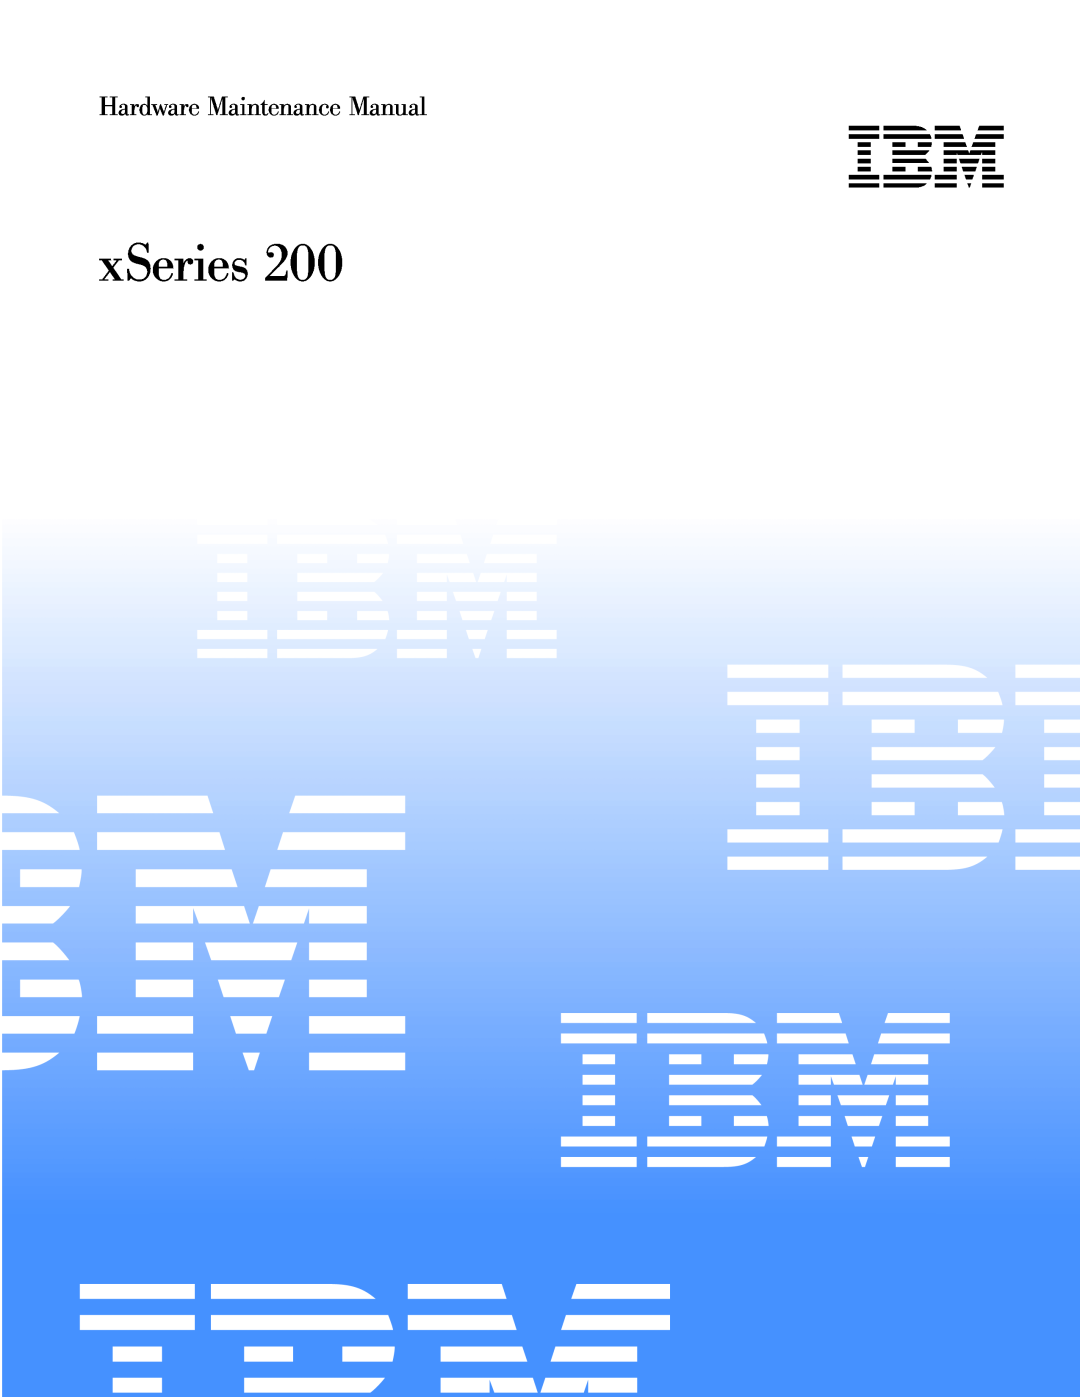 IBM x Series 200 manual xSeries, Hardware Maintenance Manual 